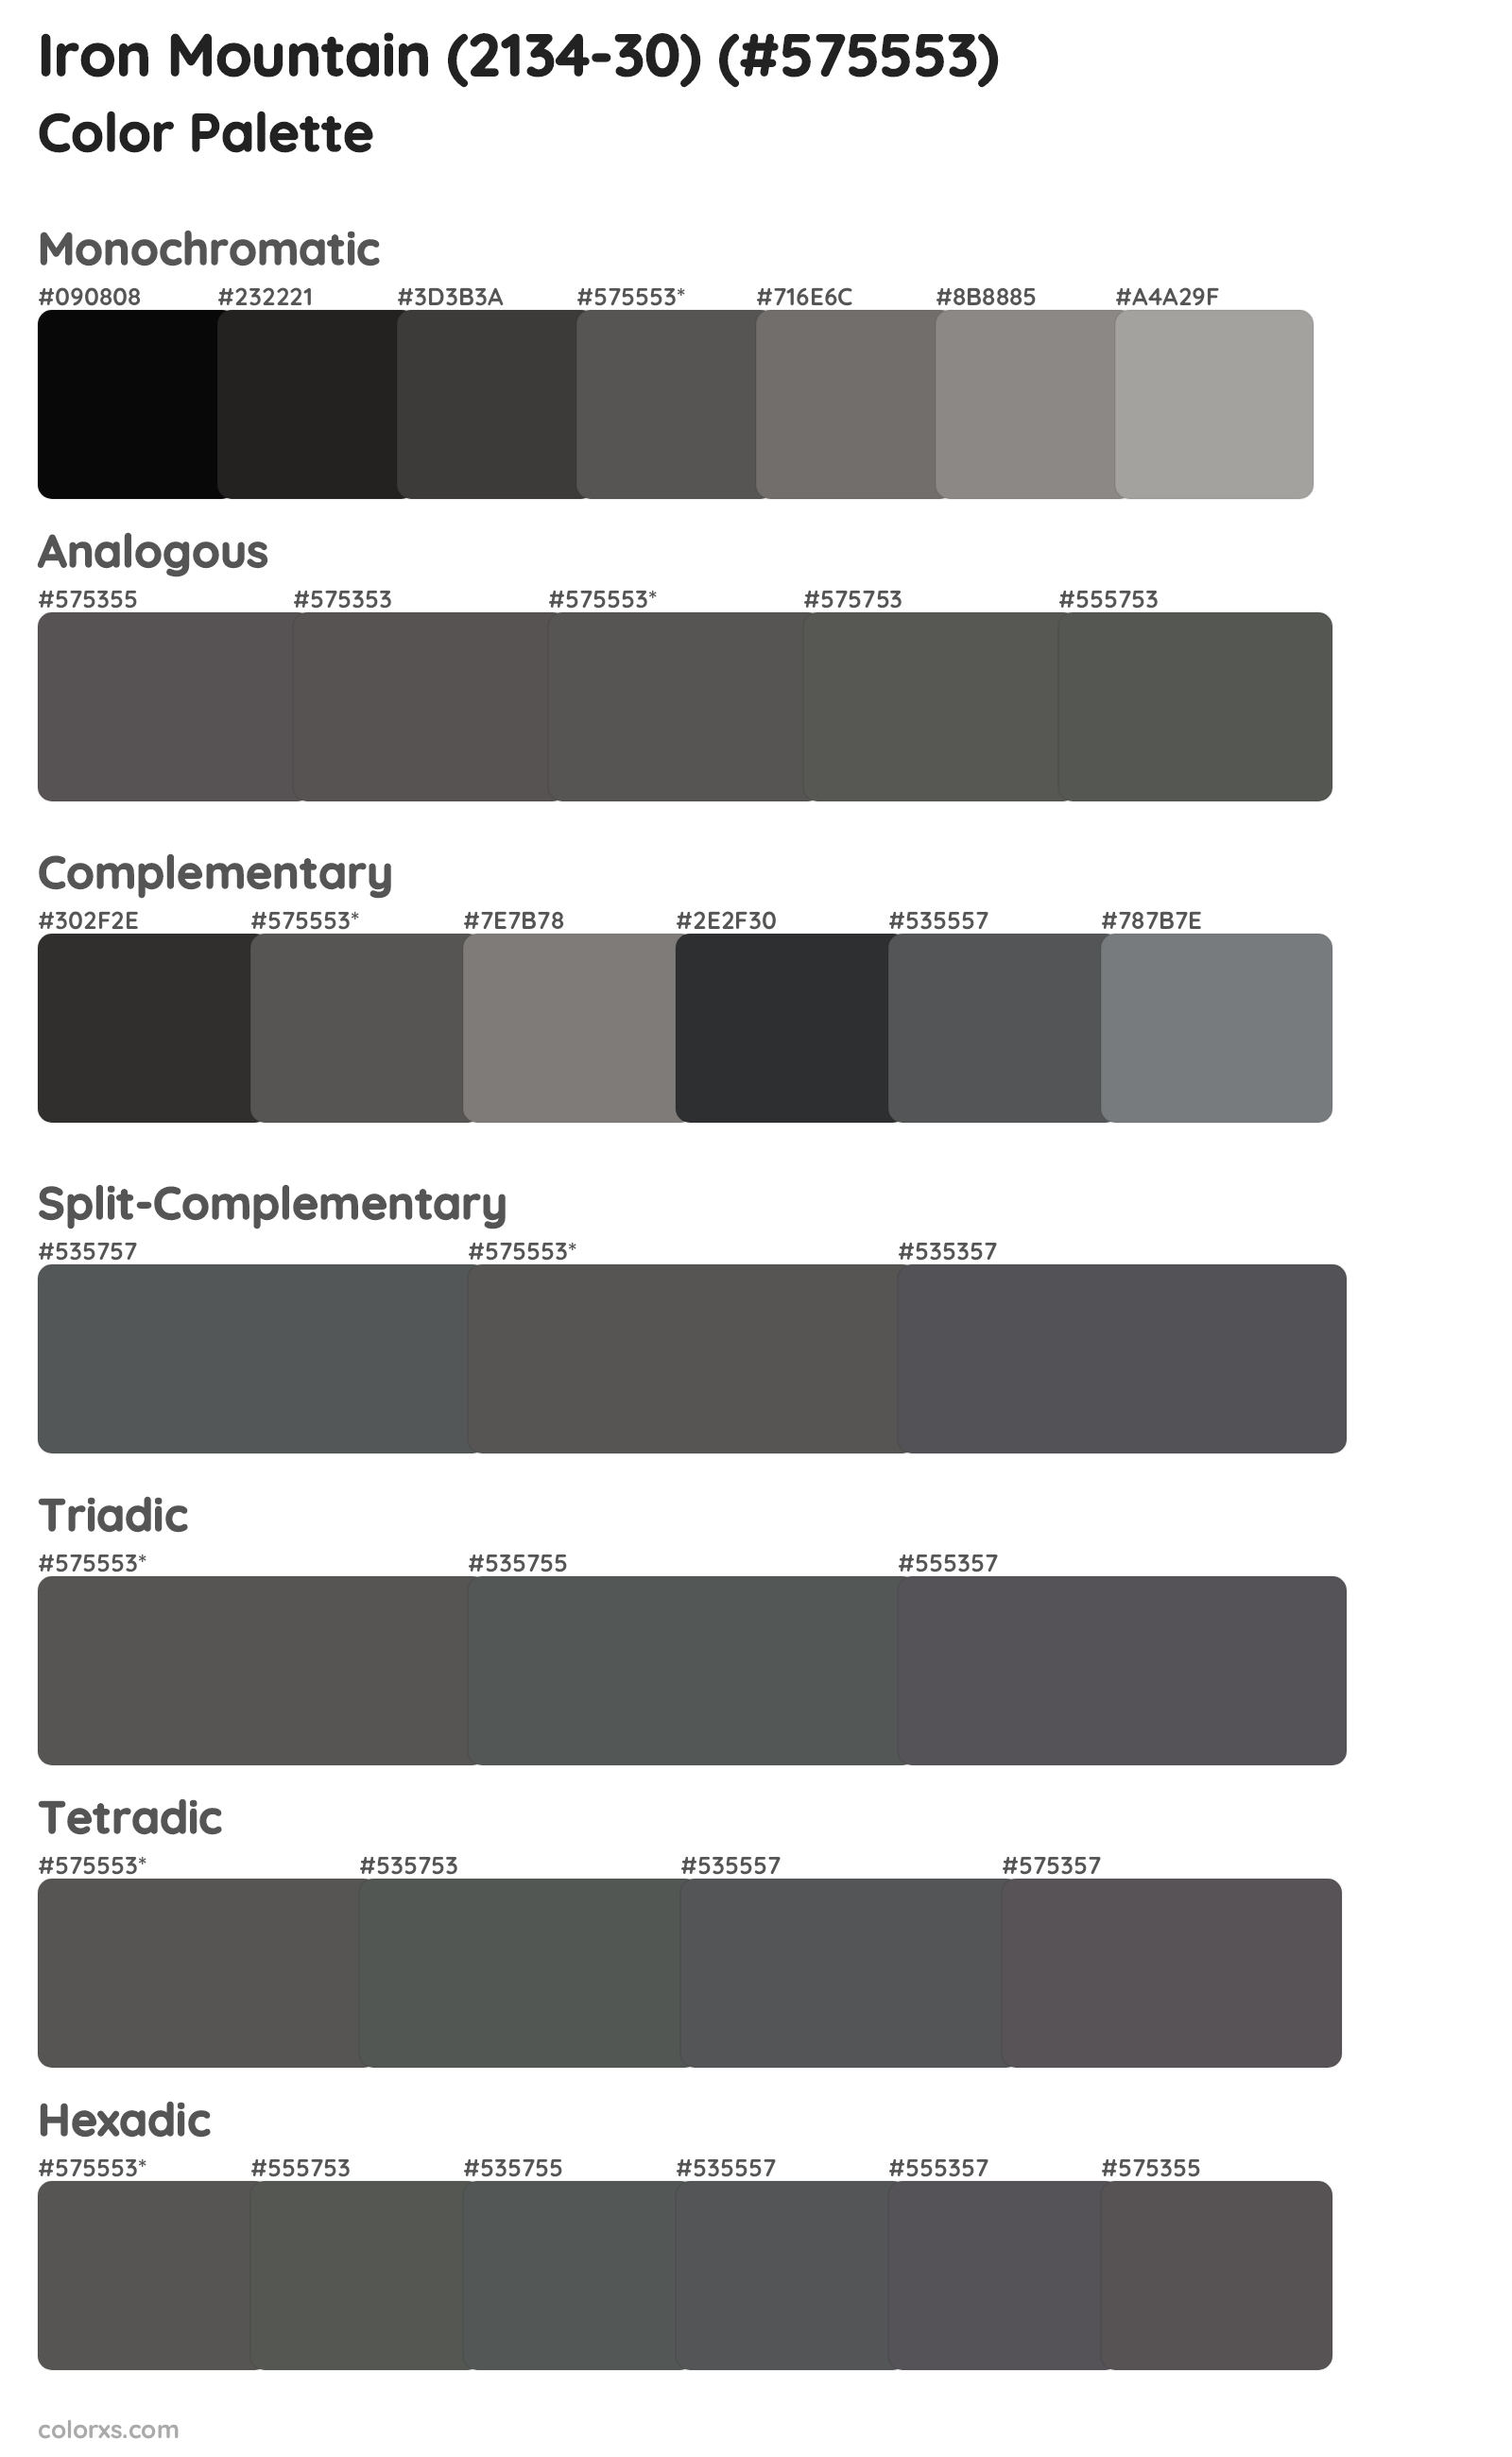 Iron Mountain (2134-30) Color Scheme Palettes